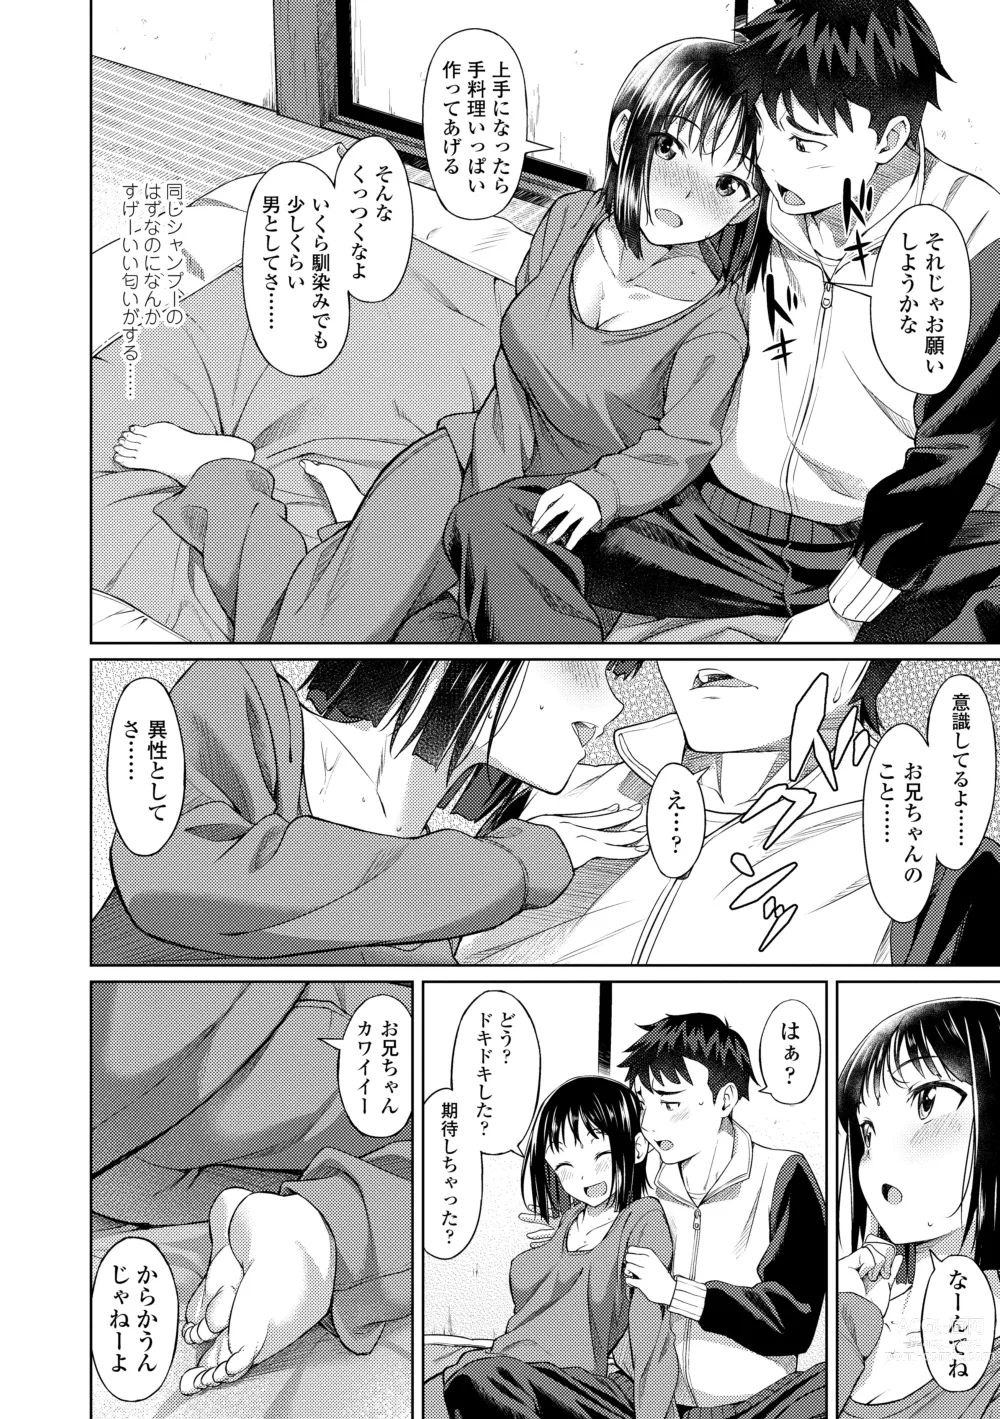 Page 8 of manga Aolove